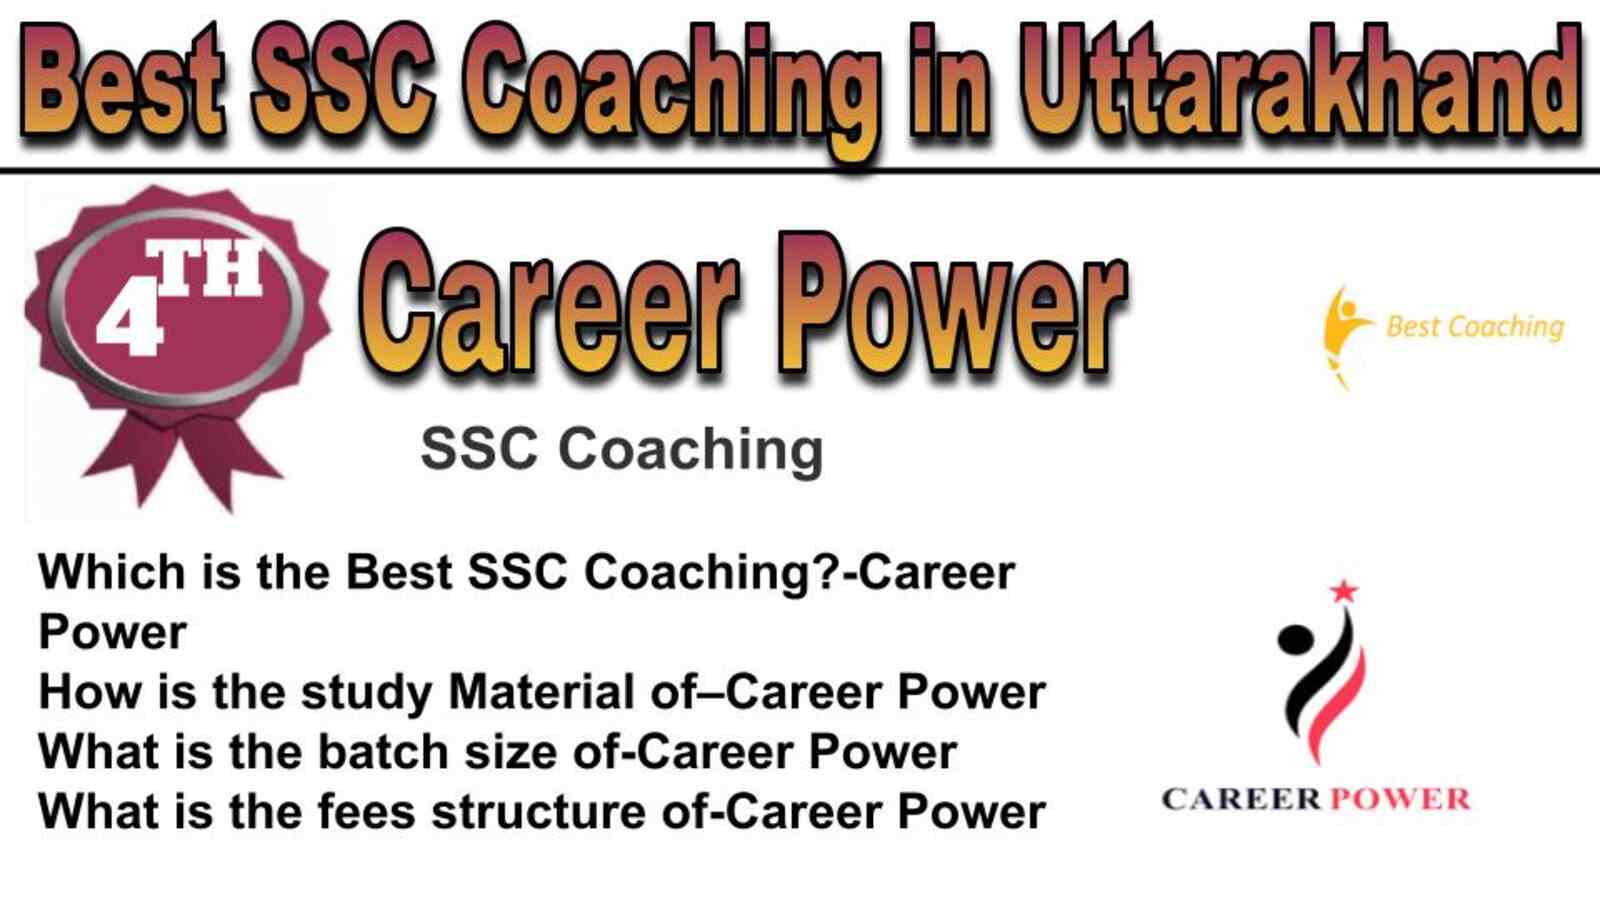 Rank 4 best SSC coaching in Uttarakhand